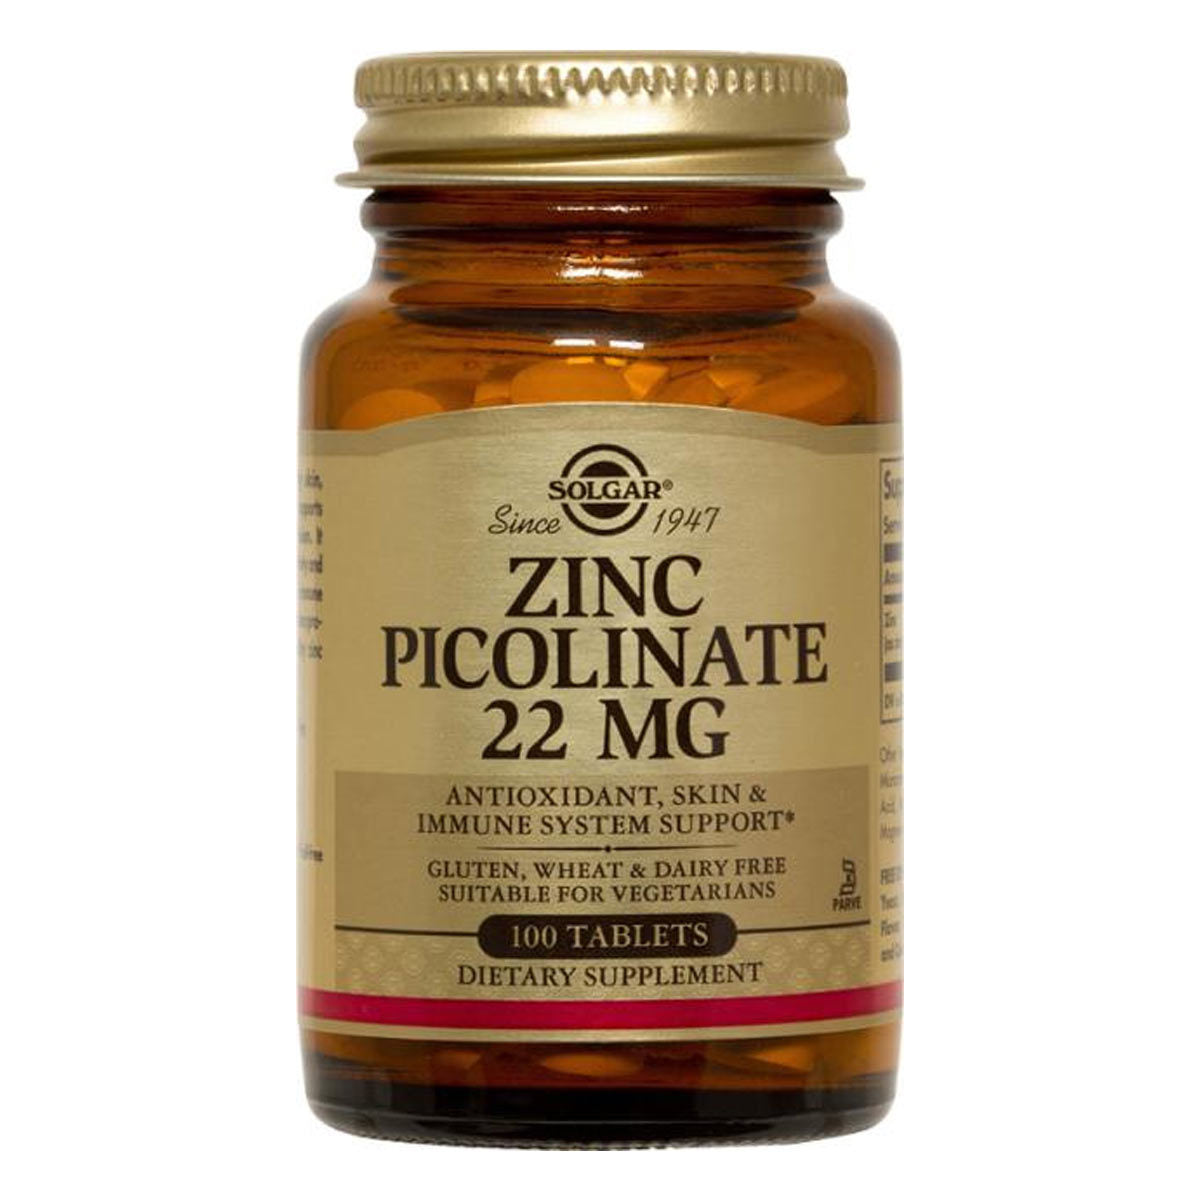 Primary image of Zinc Picolinate